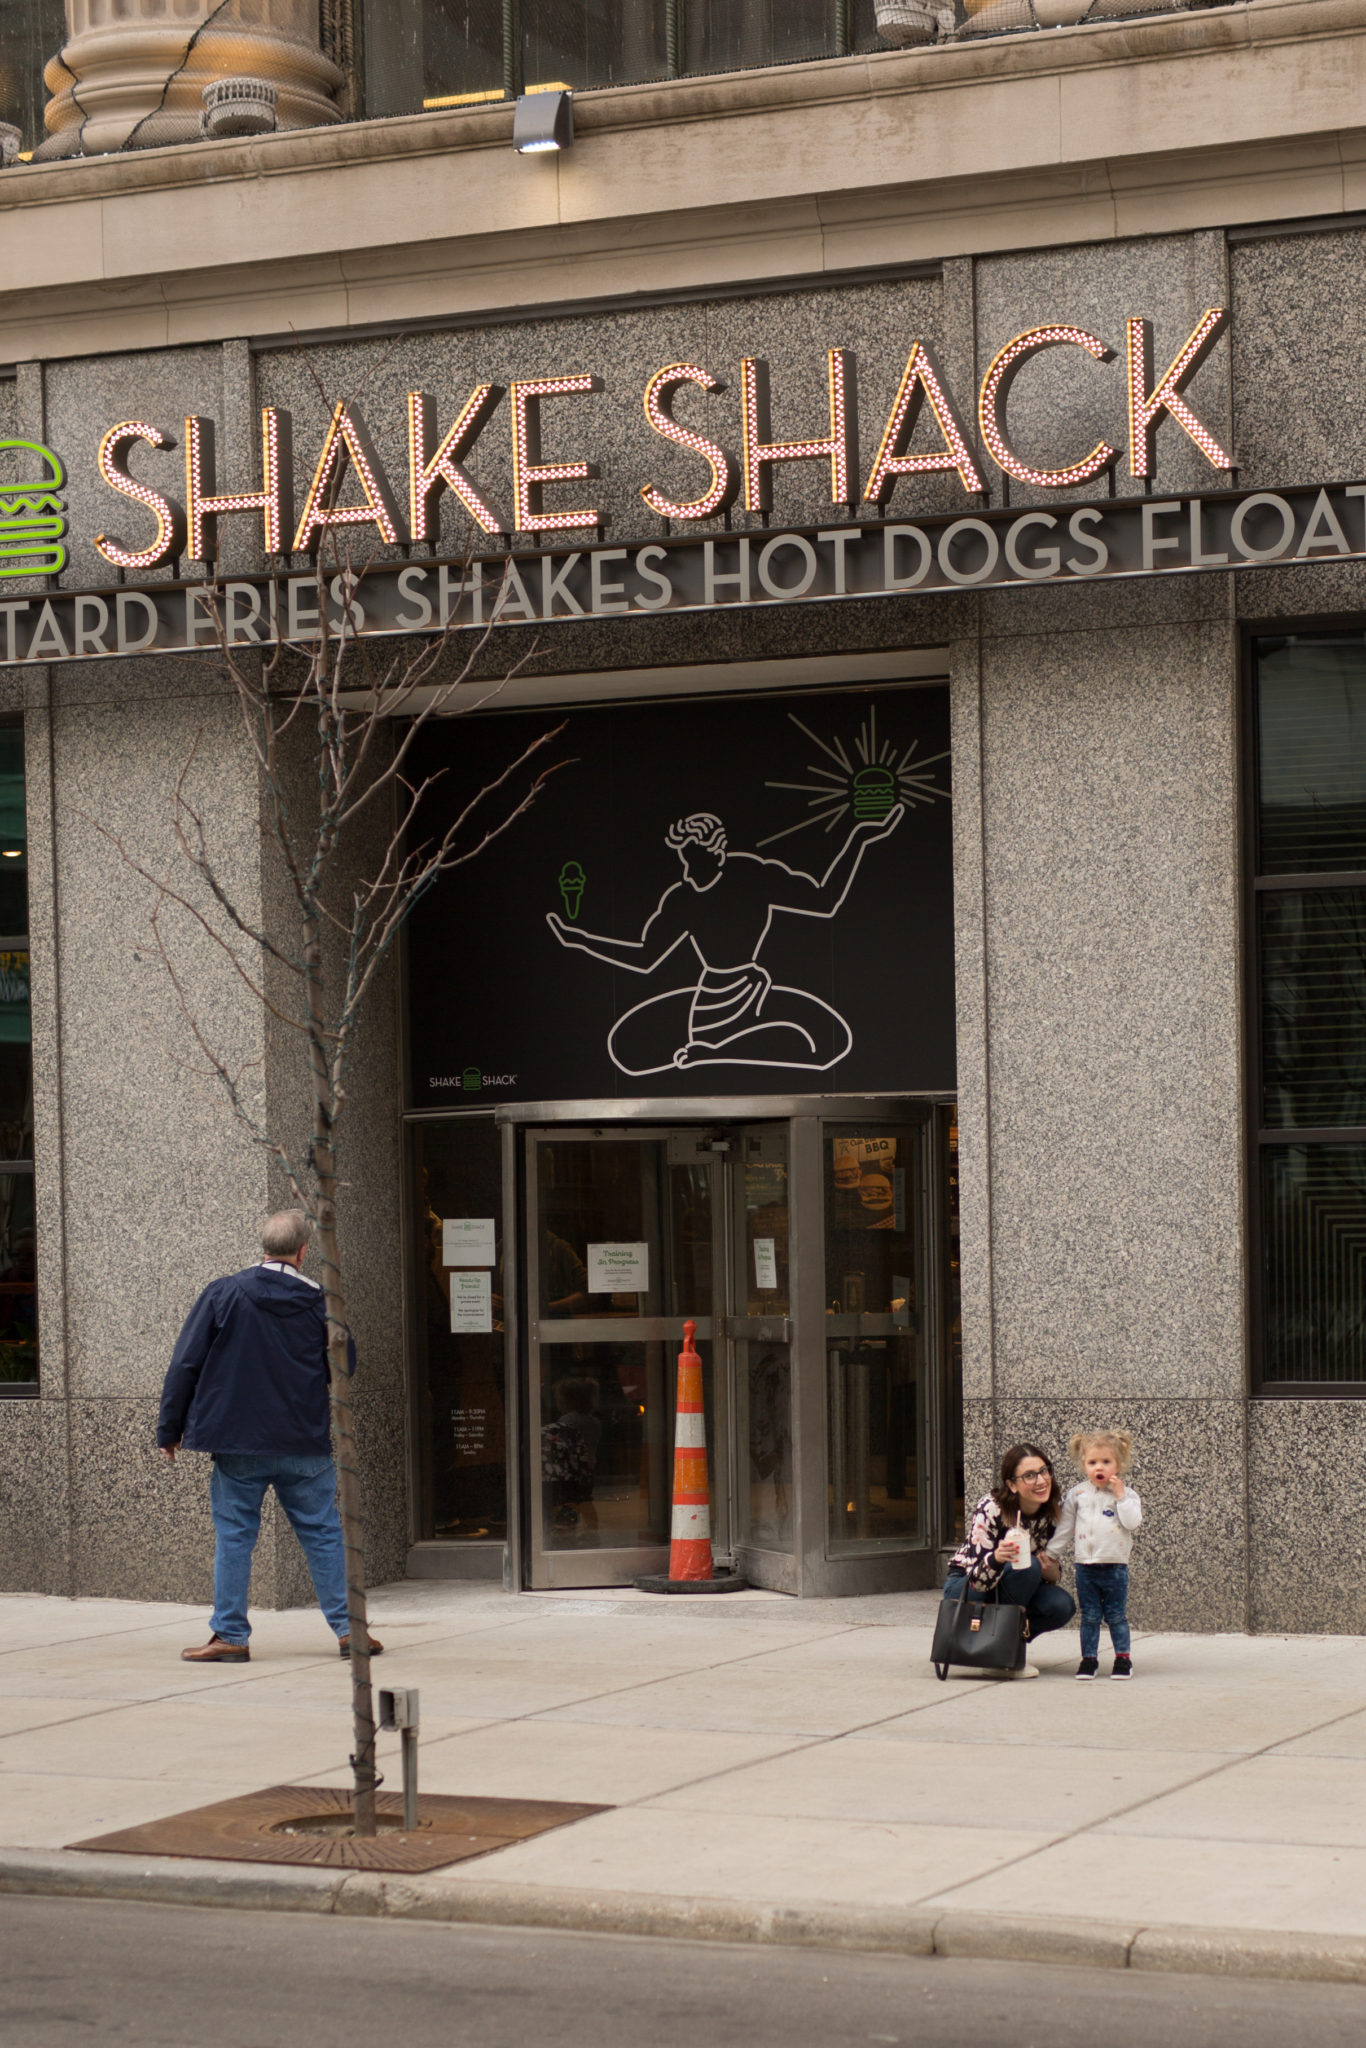 shake shack opens in detroit, michigan on allweareblog.com